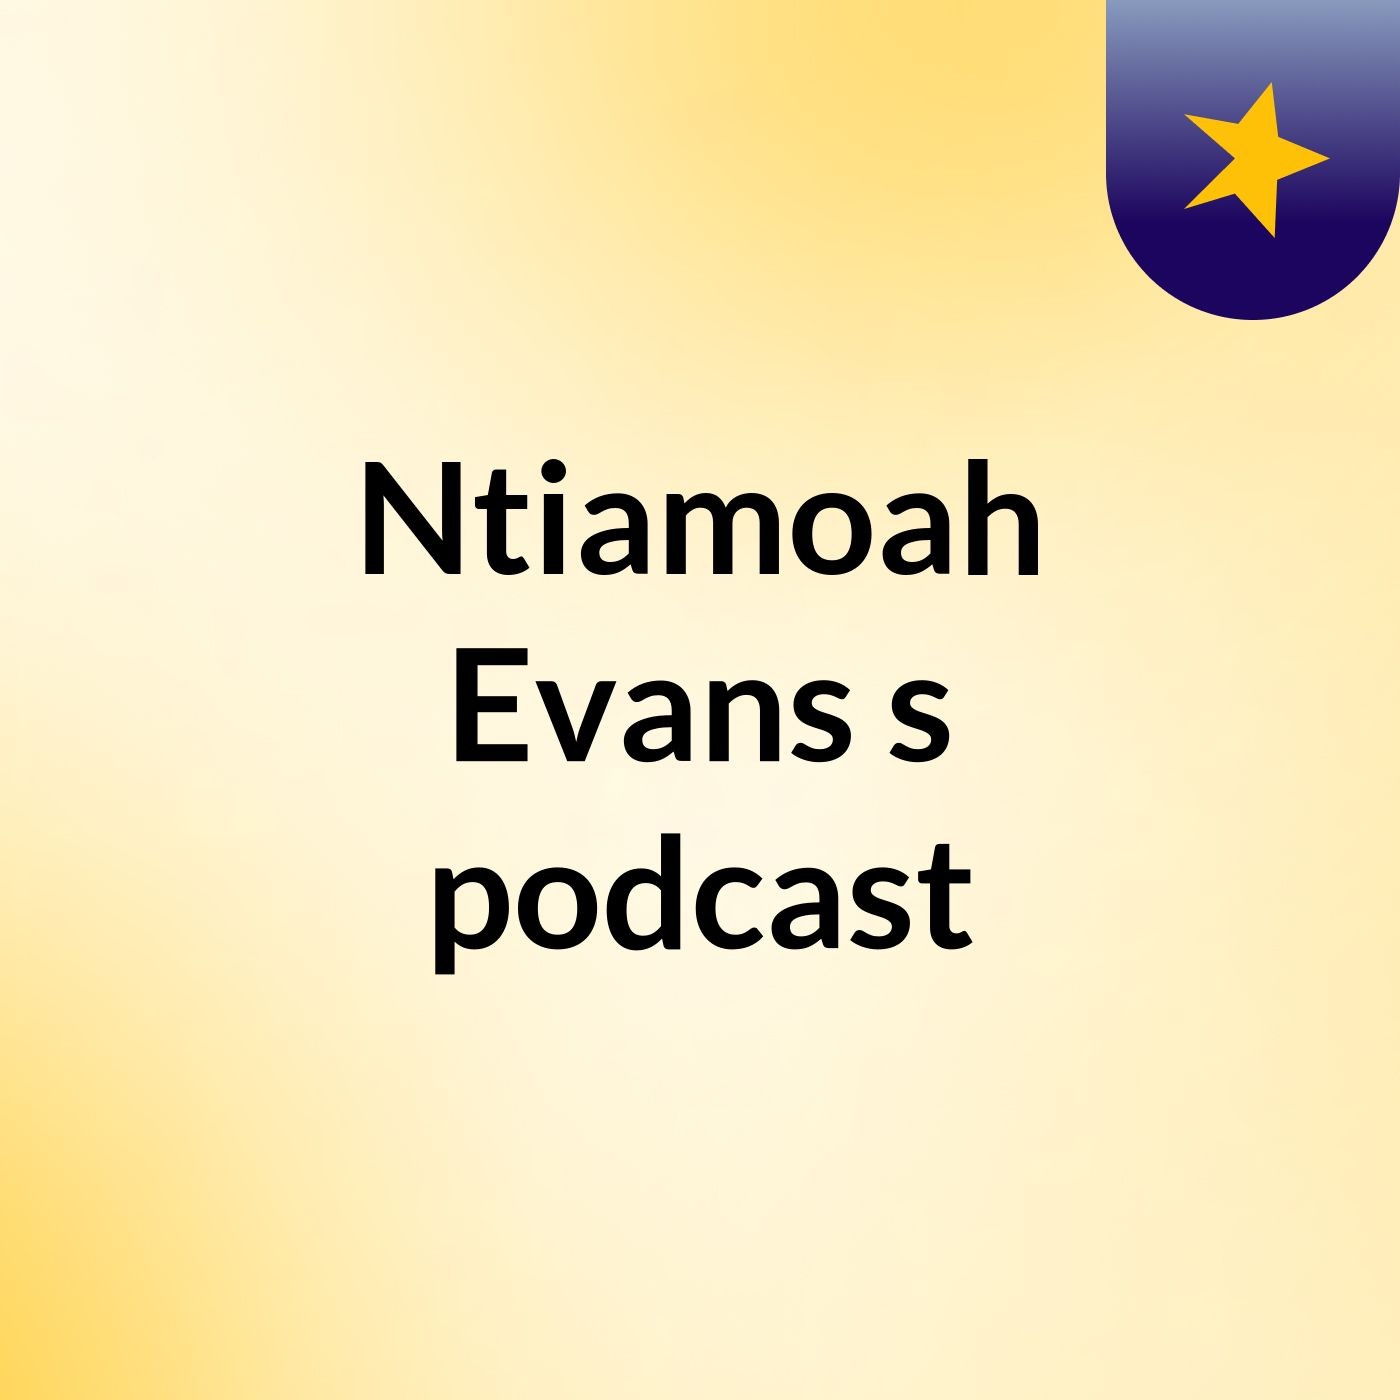 Ntiamoah Evans's podcast